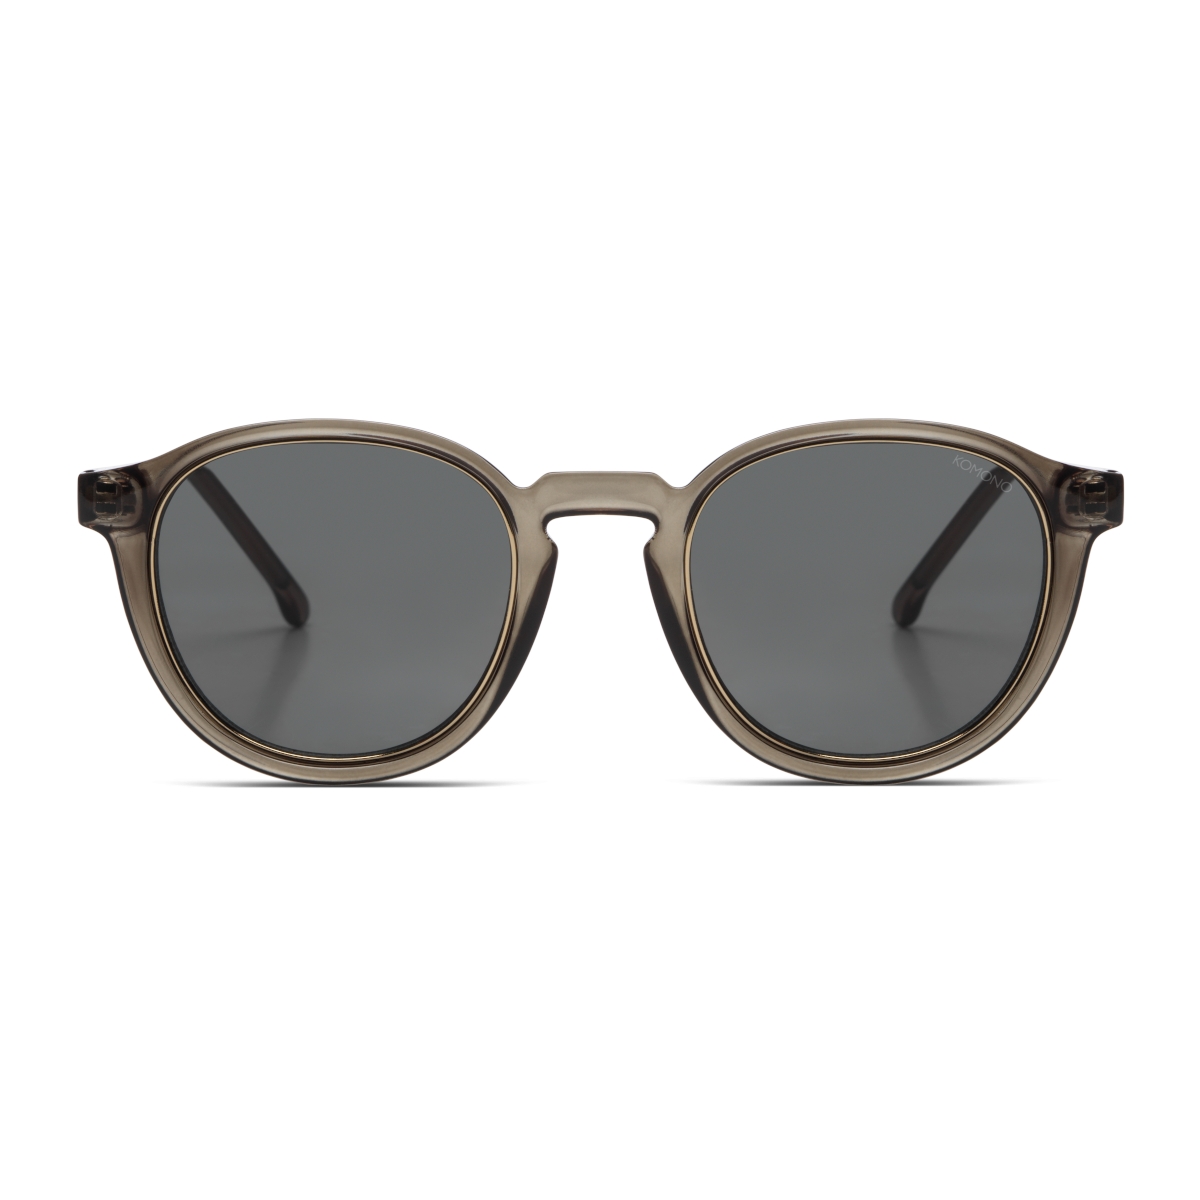 Komono Sunglasses - Στρογγυλά γυαλιά ηλίου - Musk-silver_1